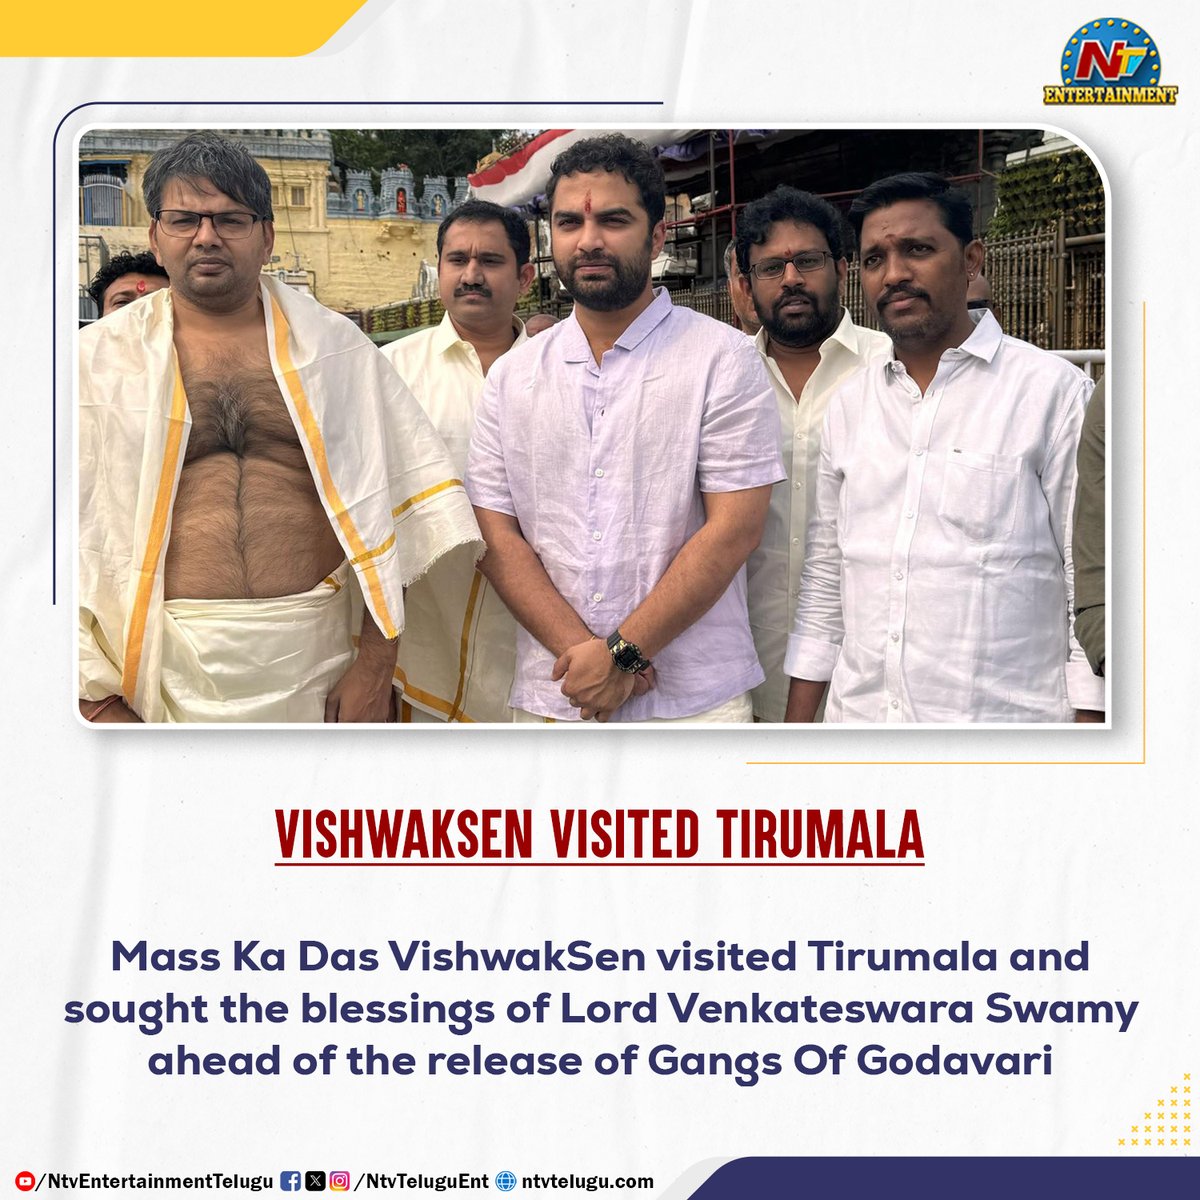 Mass Ka Das VishwakSen visited Tirumala and sought the blessings of Lord Venkateswara Swamy ahead of the release of Gangs Of Godavari 

#MassKaDas #VishwakSen #Tirumala #Tirupati #GangsOfGodavari #GOG #Anjali #NehaShetty #NTVENT